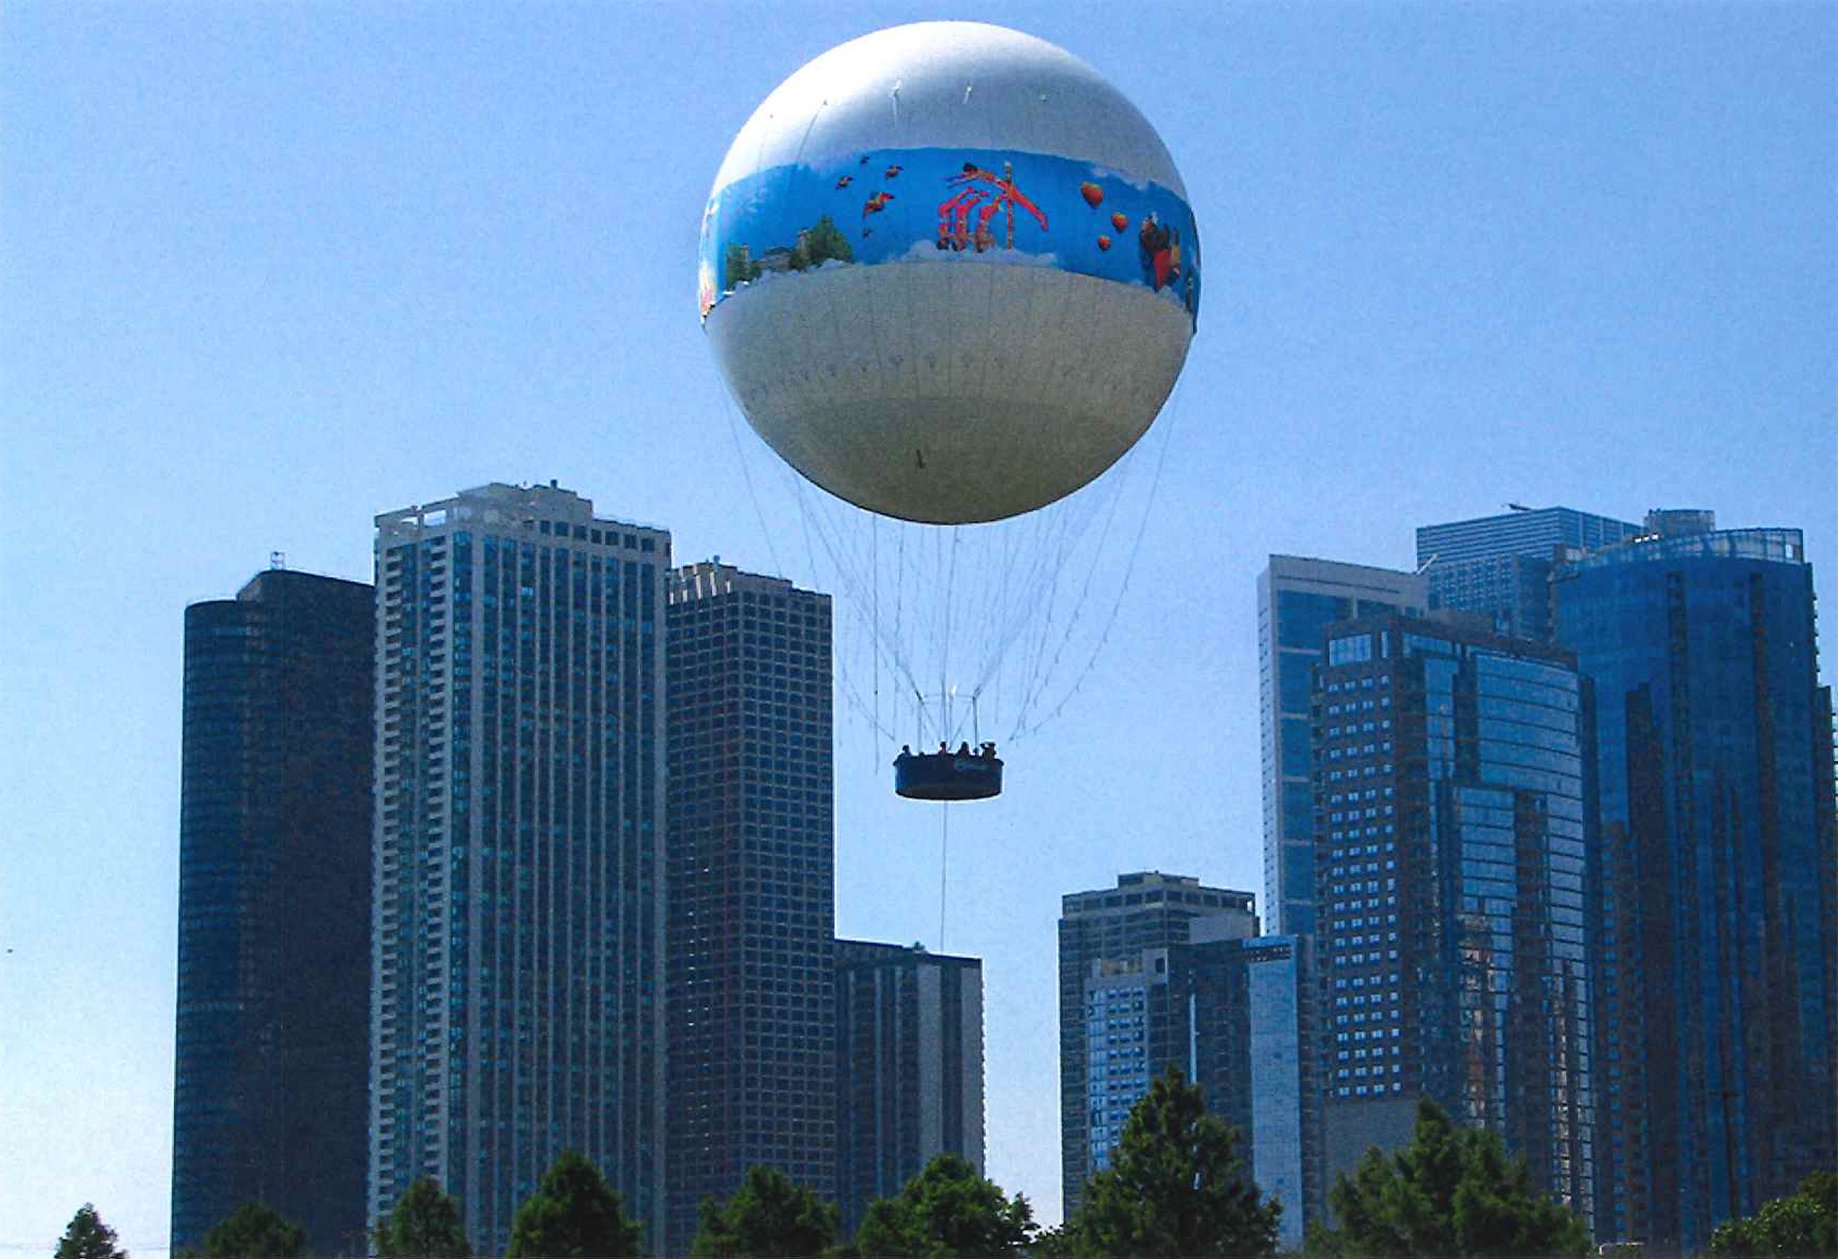 Giant Helium Balloon Ride